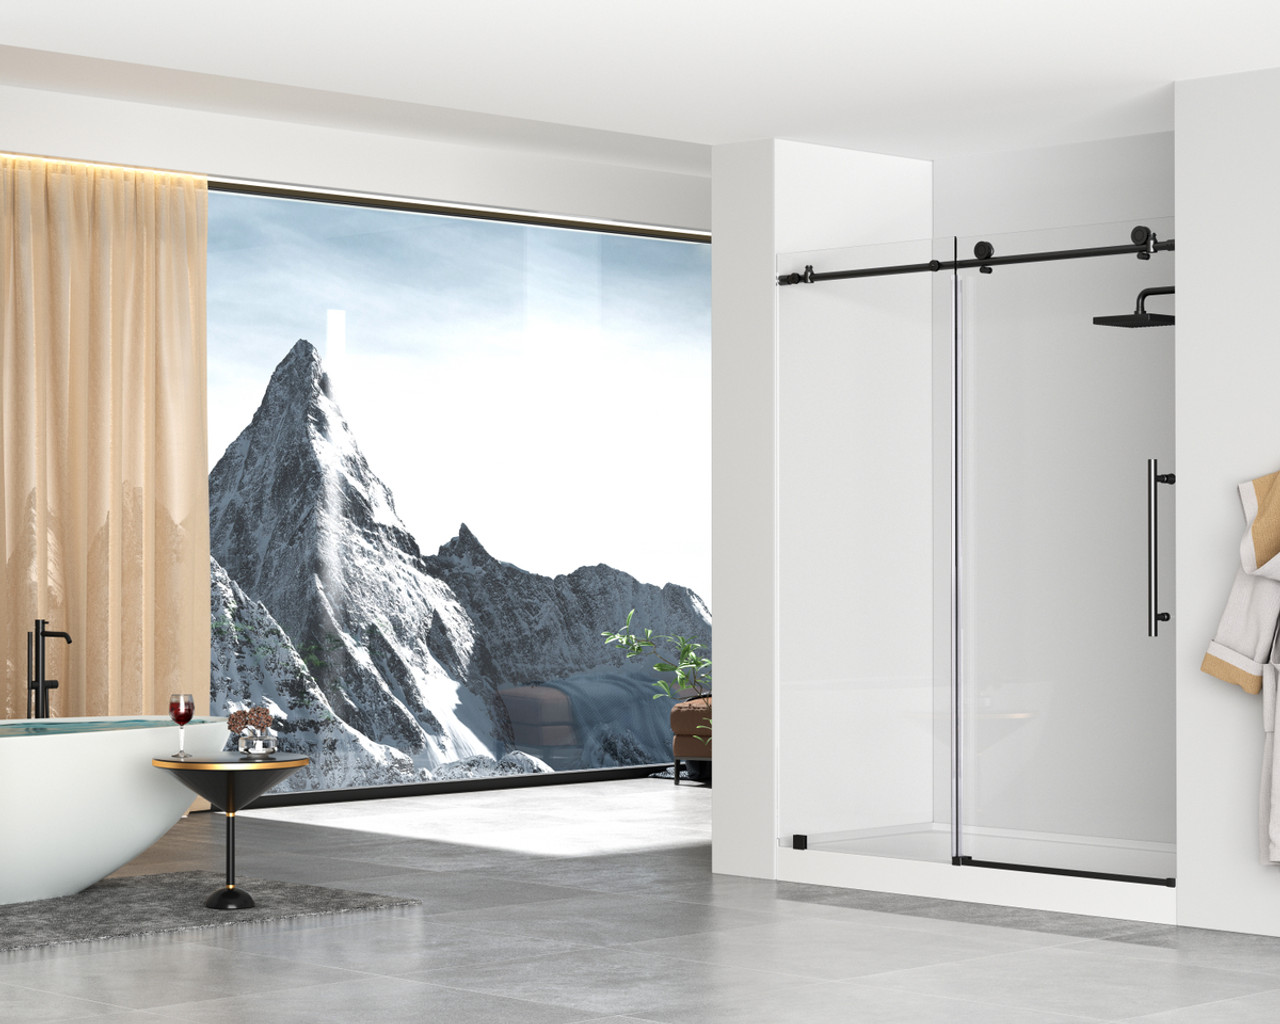 Elegant Kitchen and Bath STY01-R6032 60x32 inch Single threshold shower tray right drain in glossy white